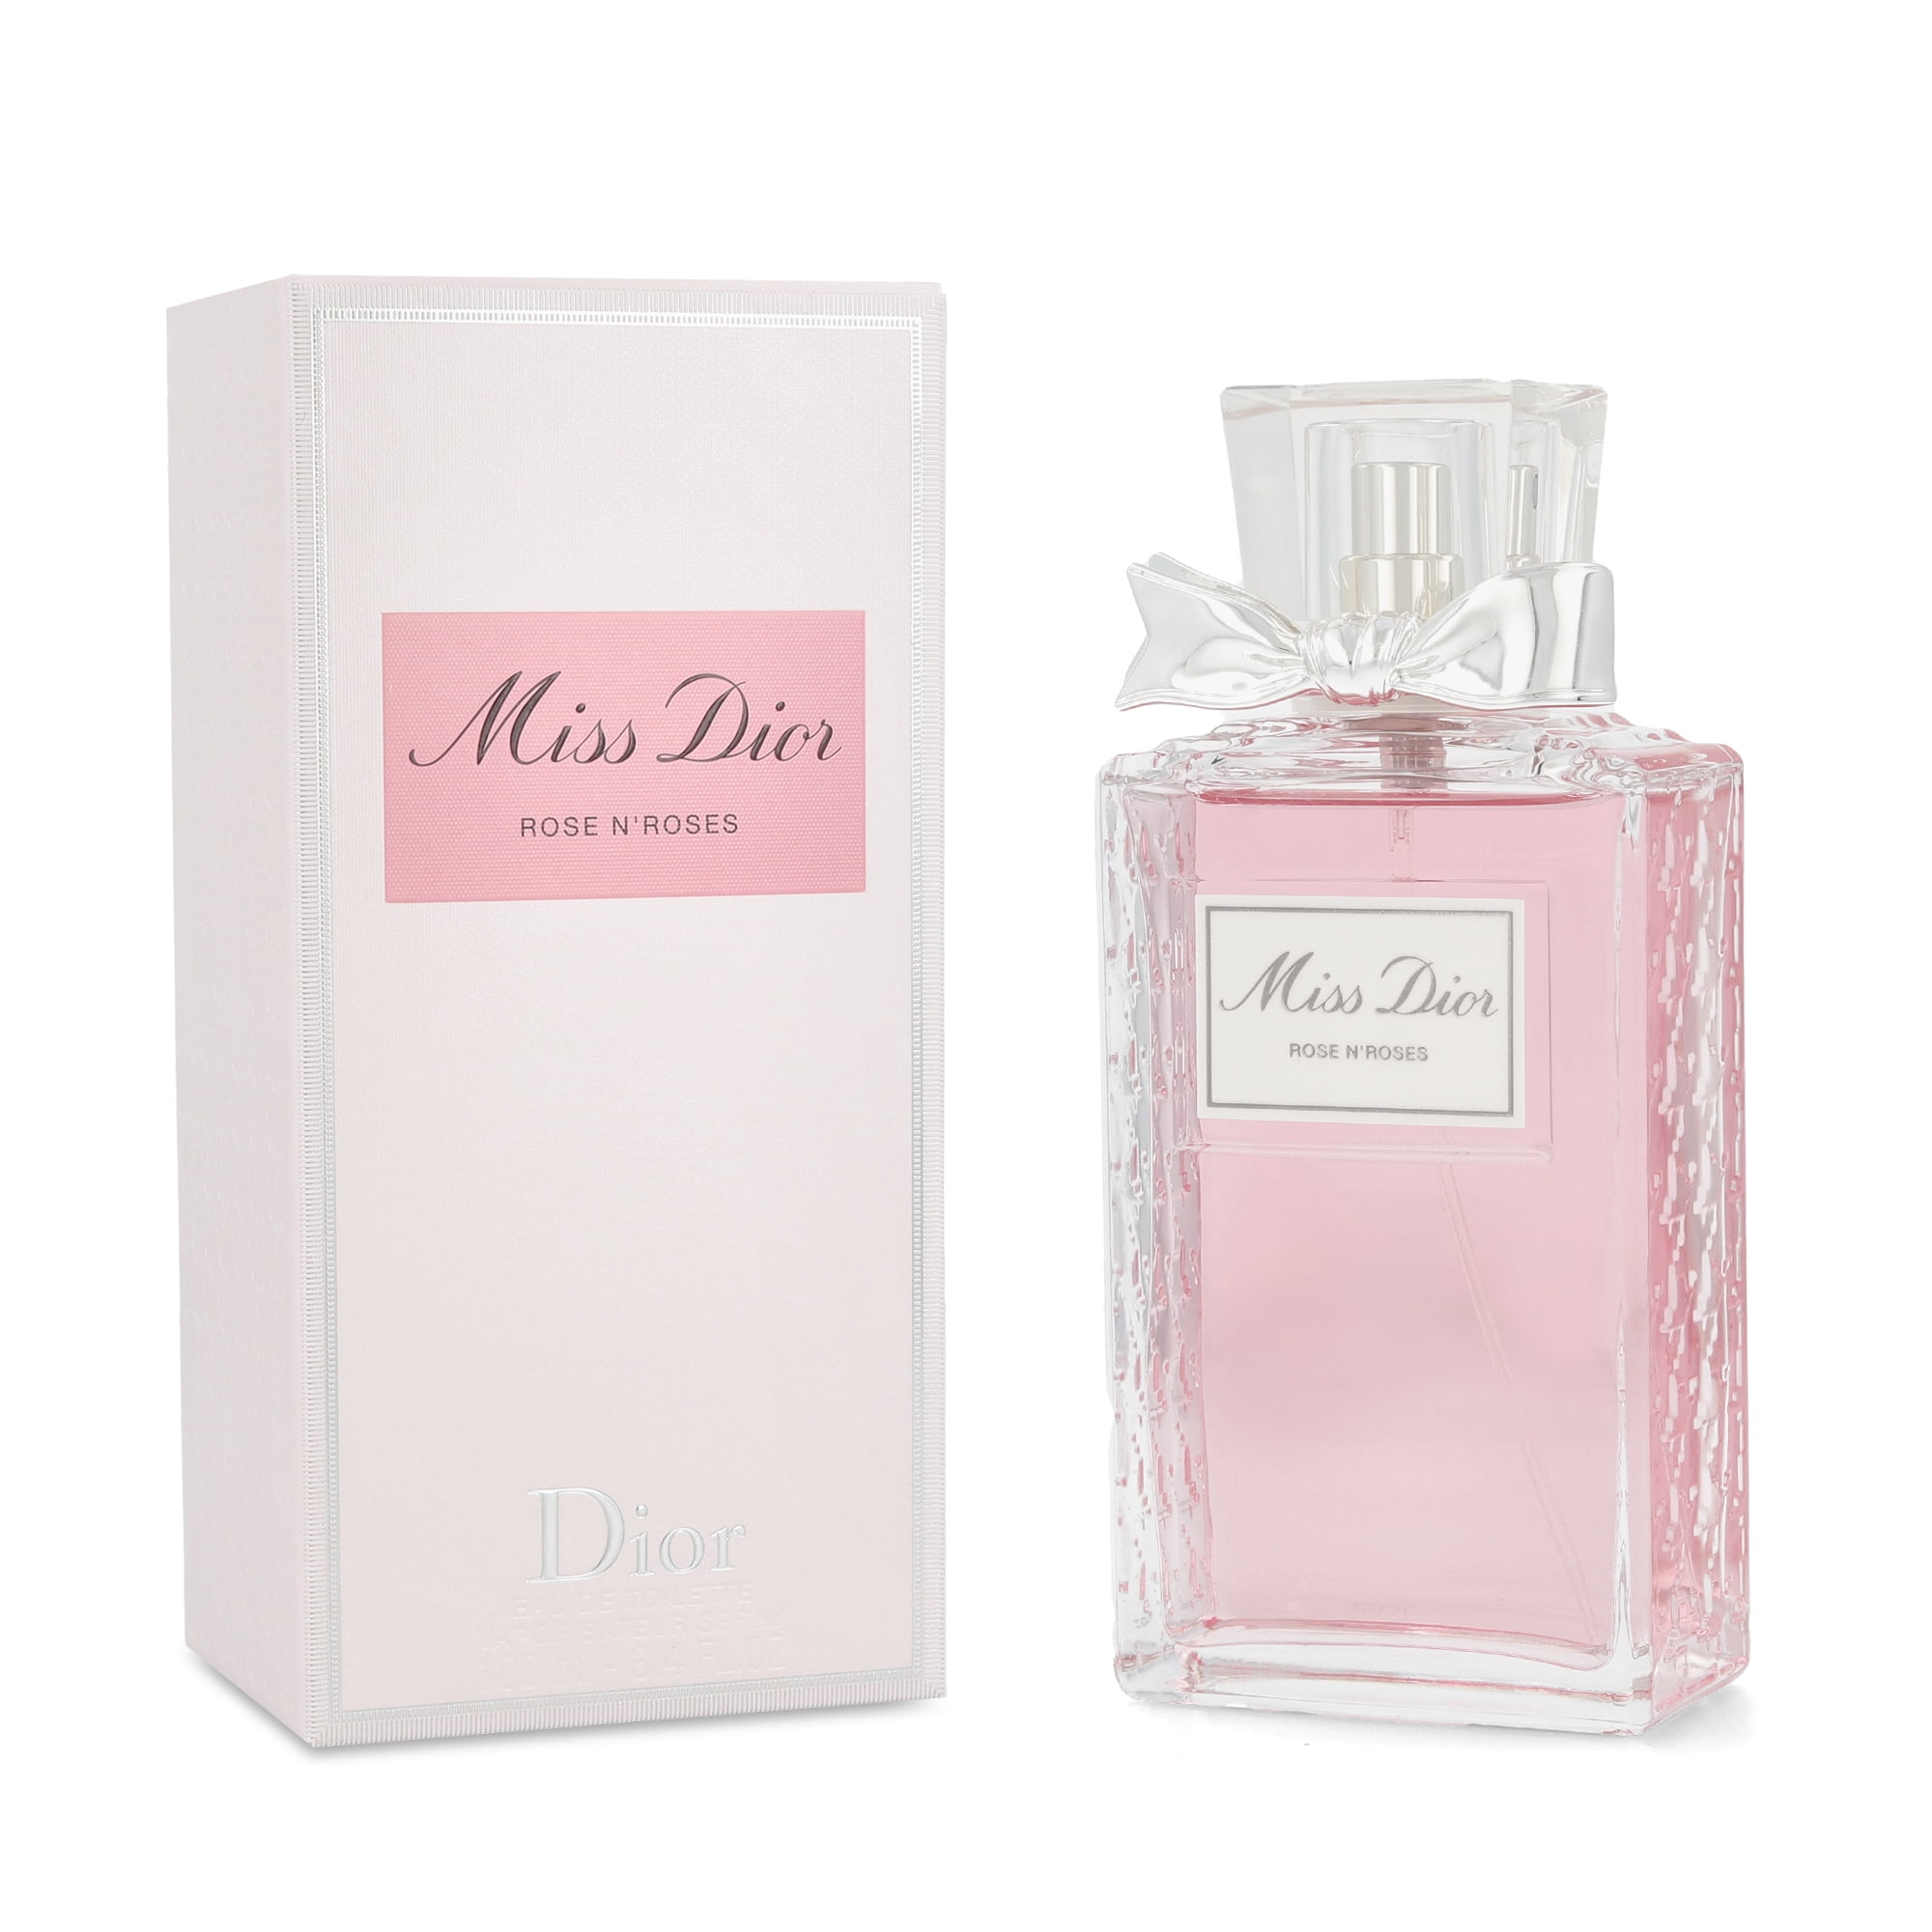 Perfume Christian Dior Addict Mujer 100ml  Hola Compras  Tienda en Línea